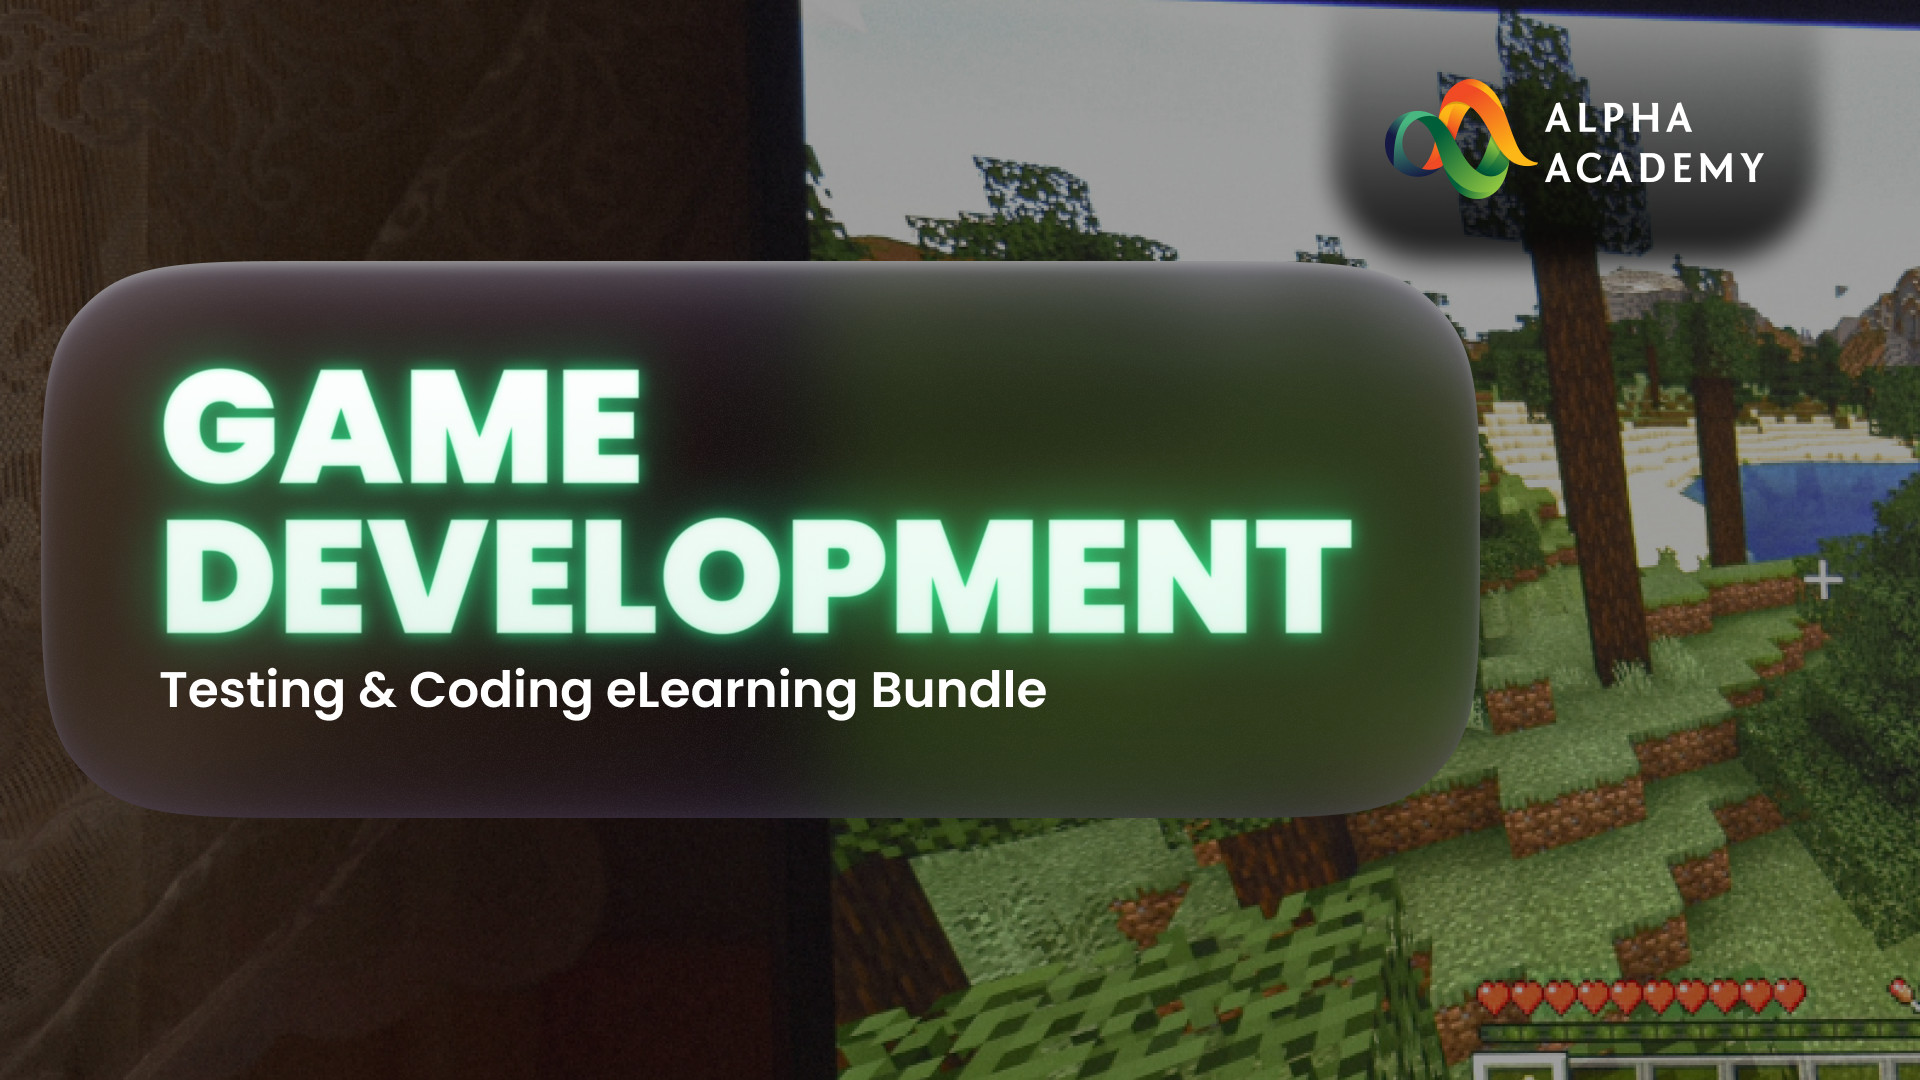 Game Development, Testing & Coding eLearning Bundle Alpha Academy Code [$ 10.19]